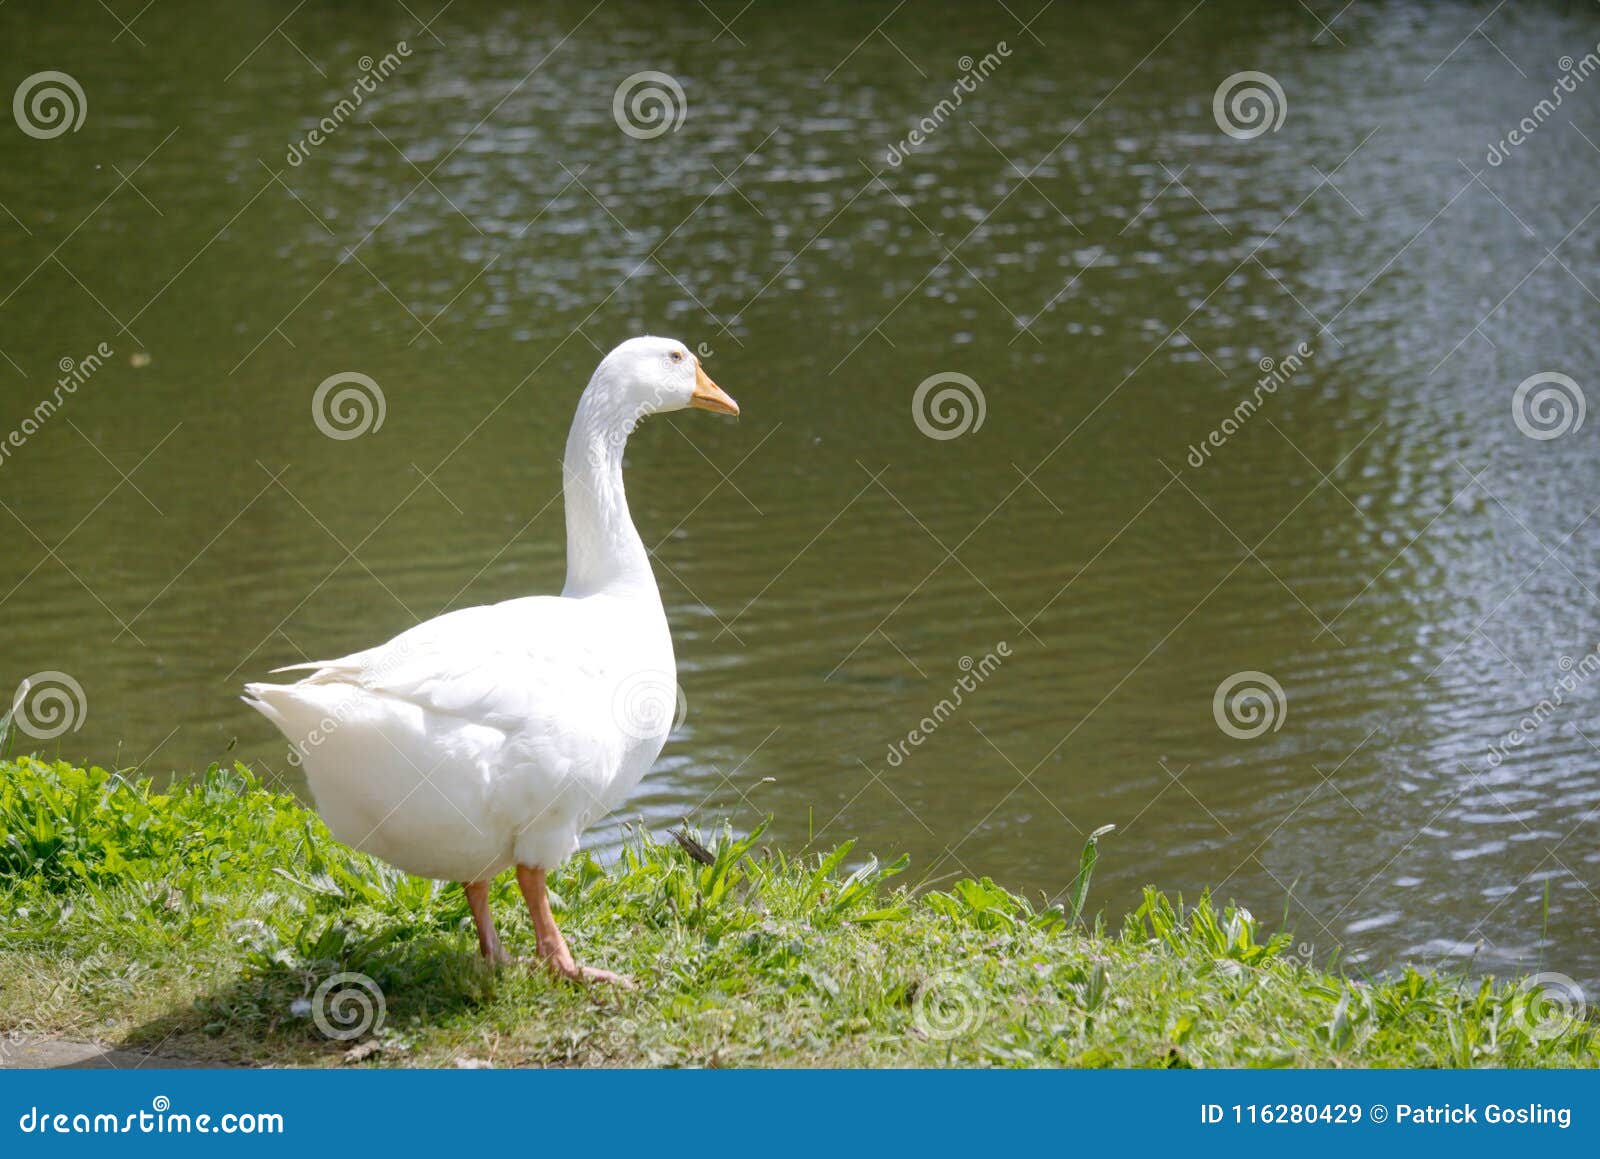 the white domesticated emden goose.